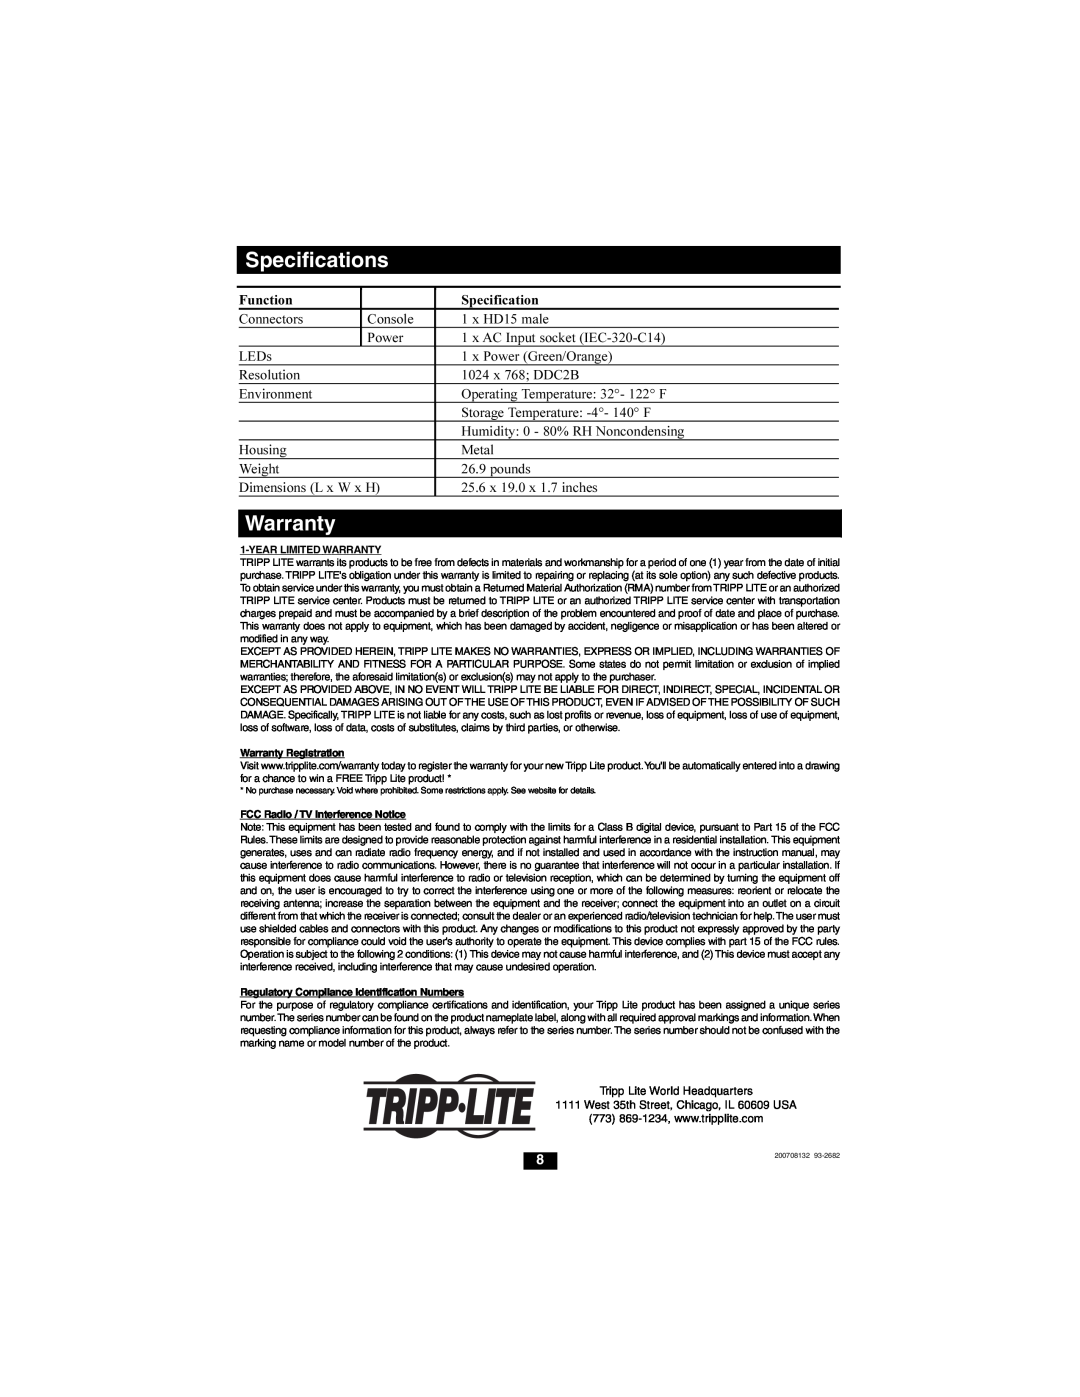 Tripp Lite B021-000-19 Specifications, Warranty, Tripp Lite World Headquarters, West 35th Street, Chicago, IL 60609 USA 